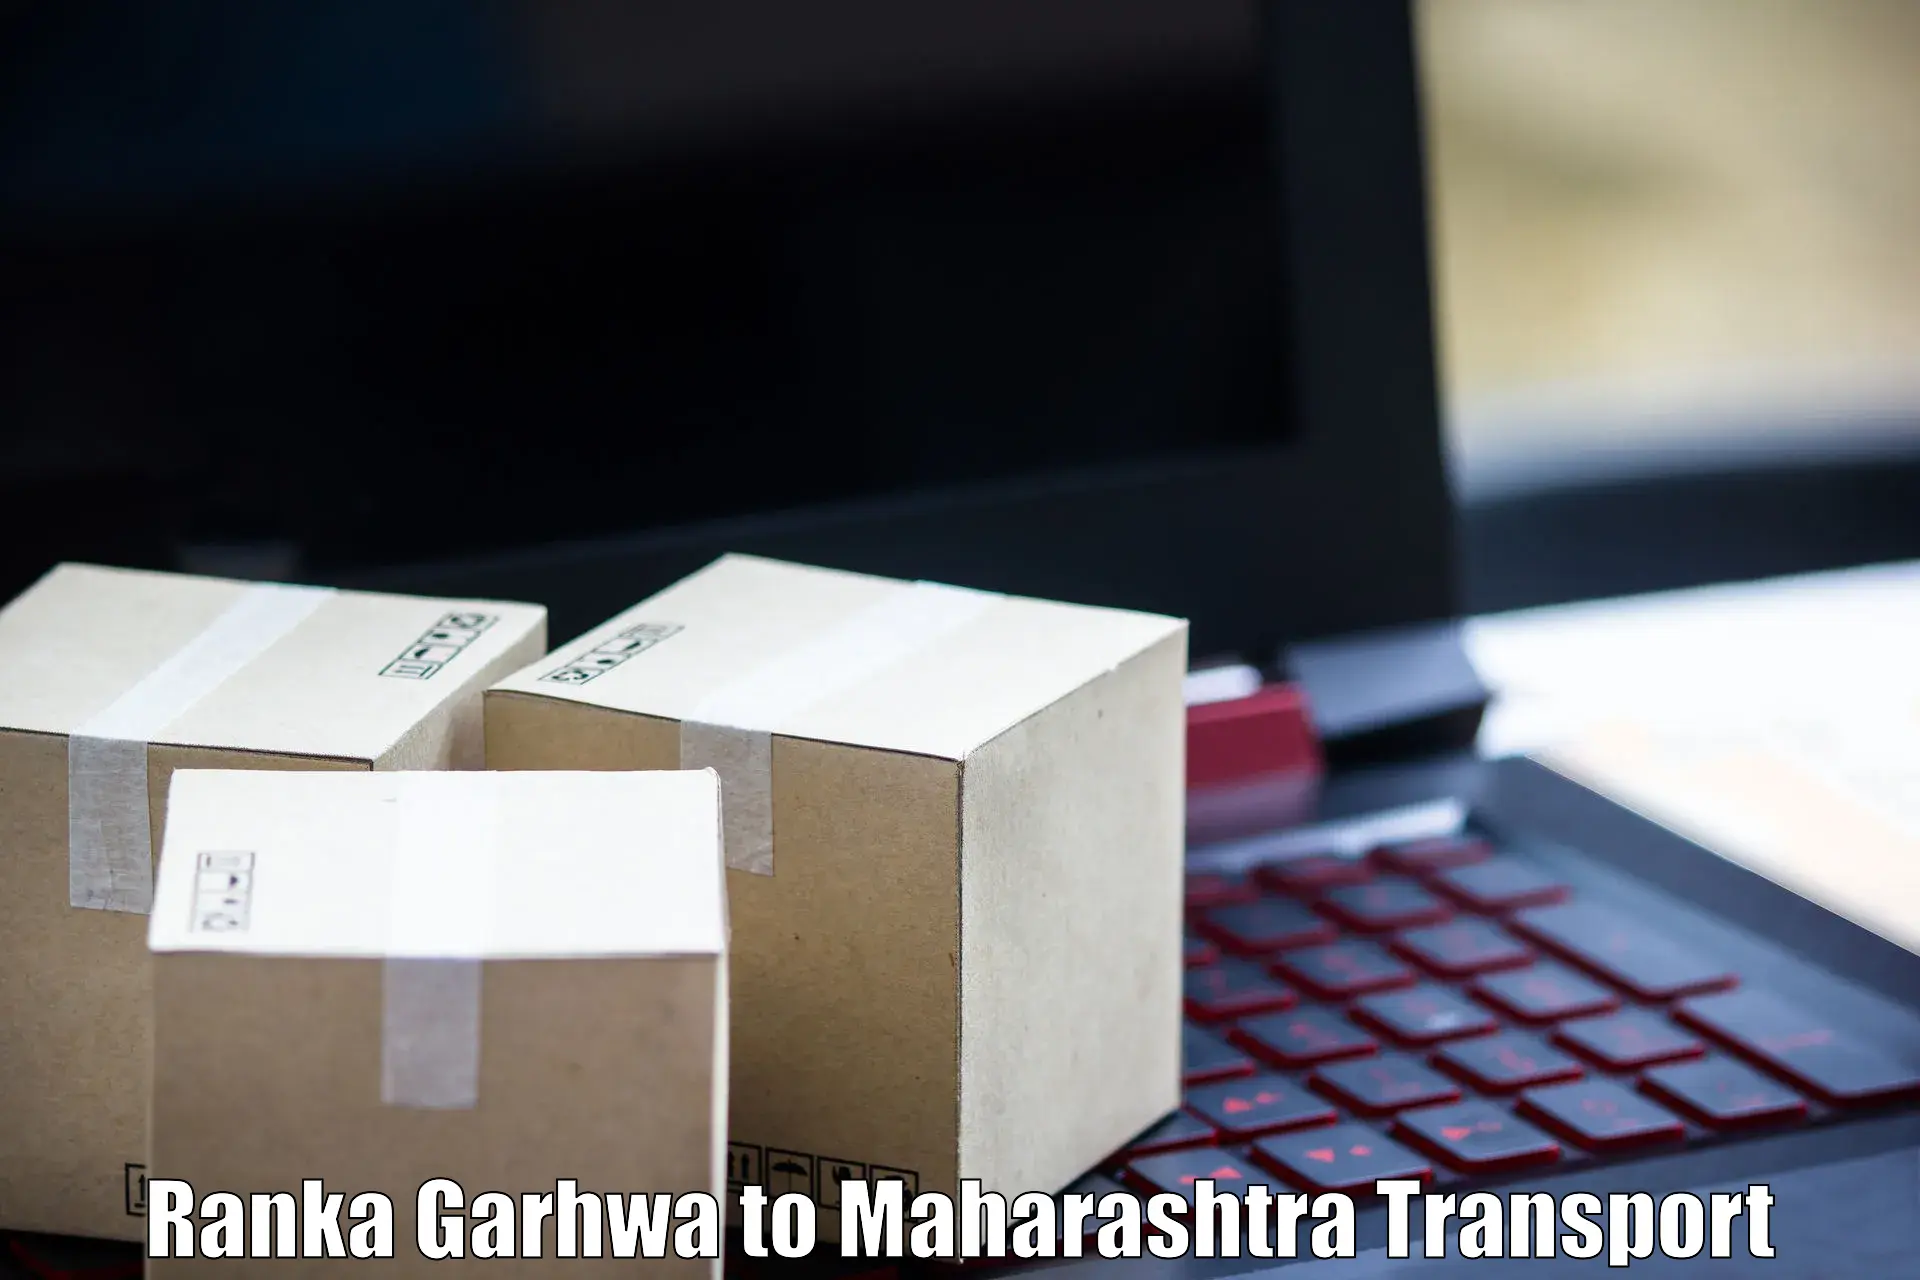 Goods delivery service Ranka Garhwa to Andheri